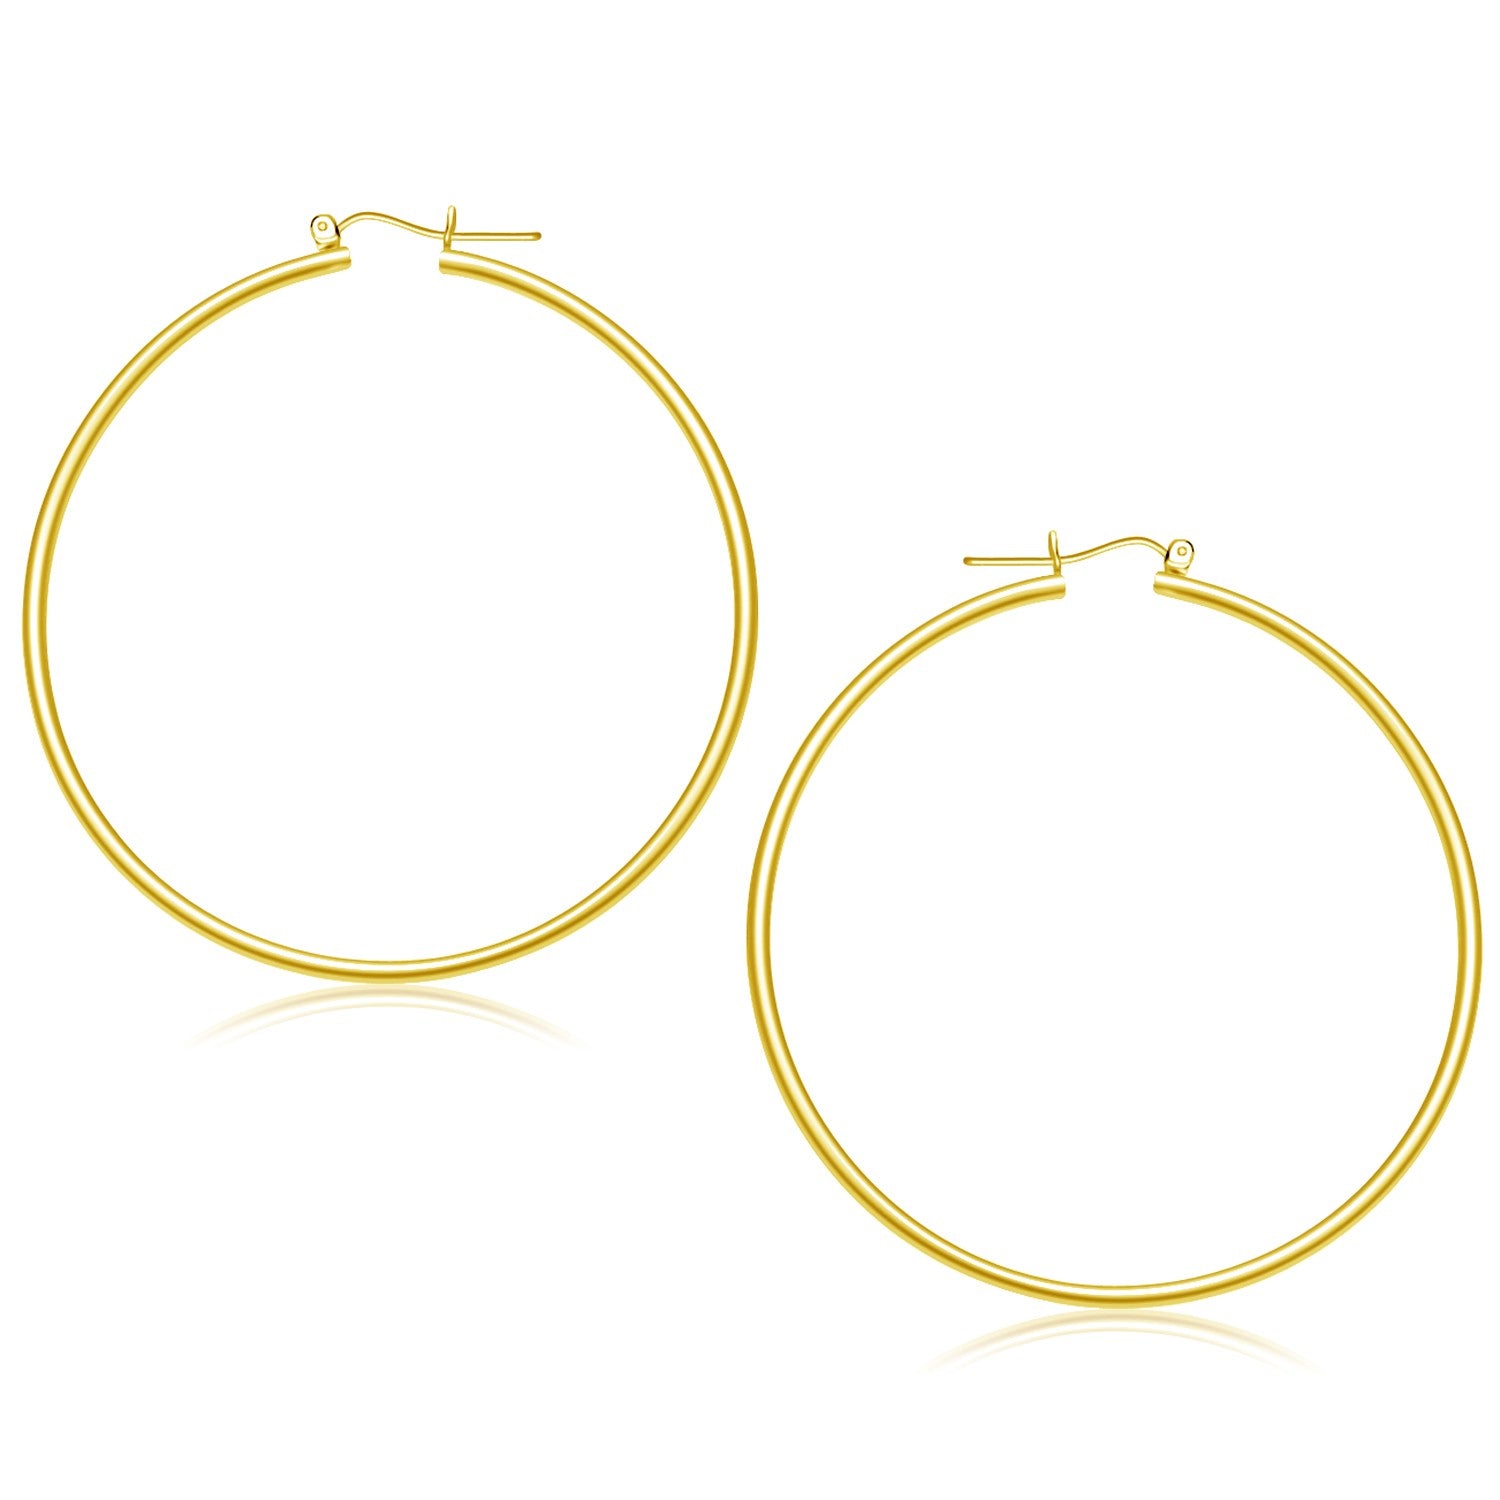 14k Yellow Gold Polished Hoop Earrings (55 mm)